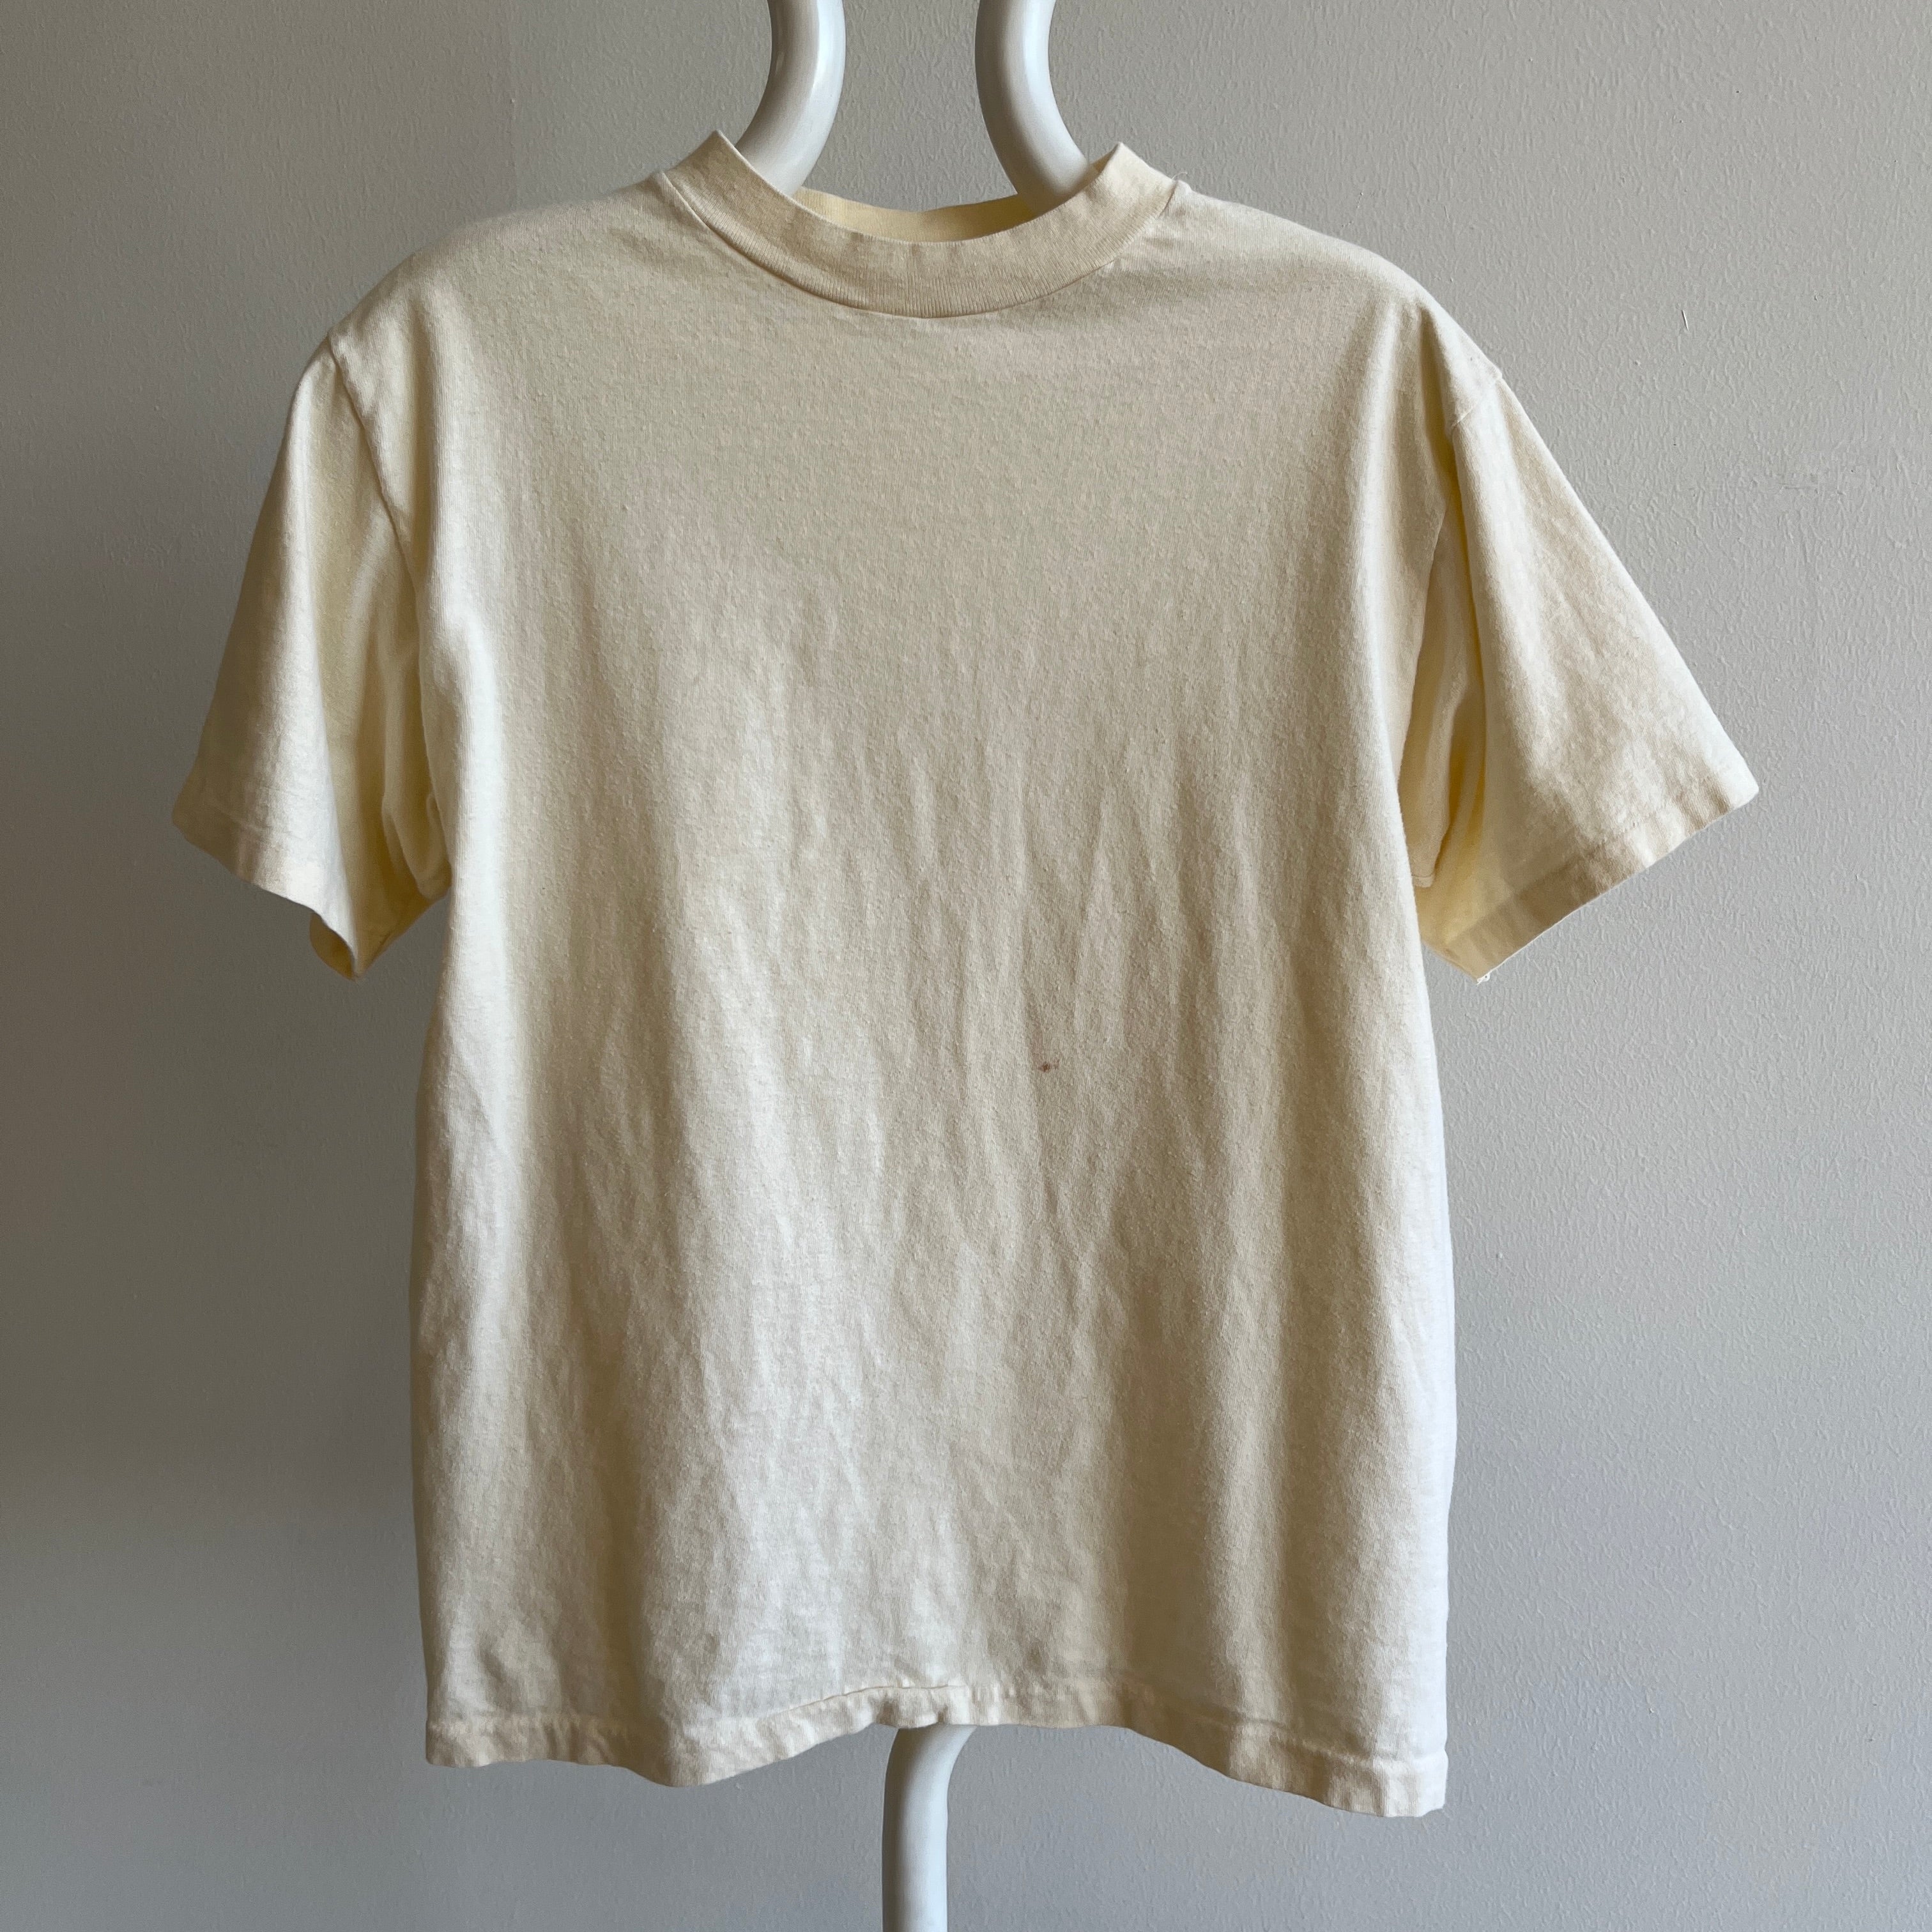 1980s Ecru Cotton T-Shirt by Hanes